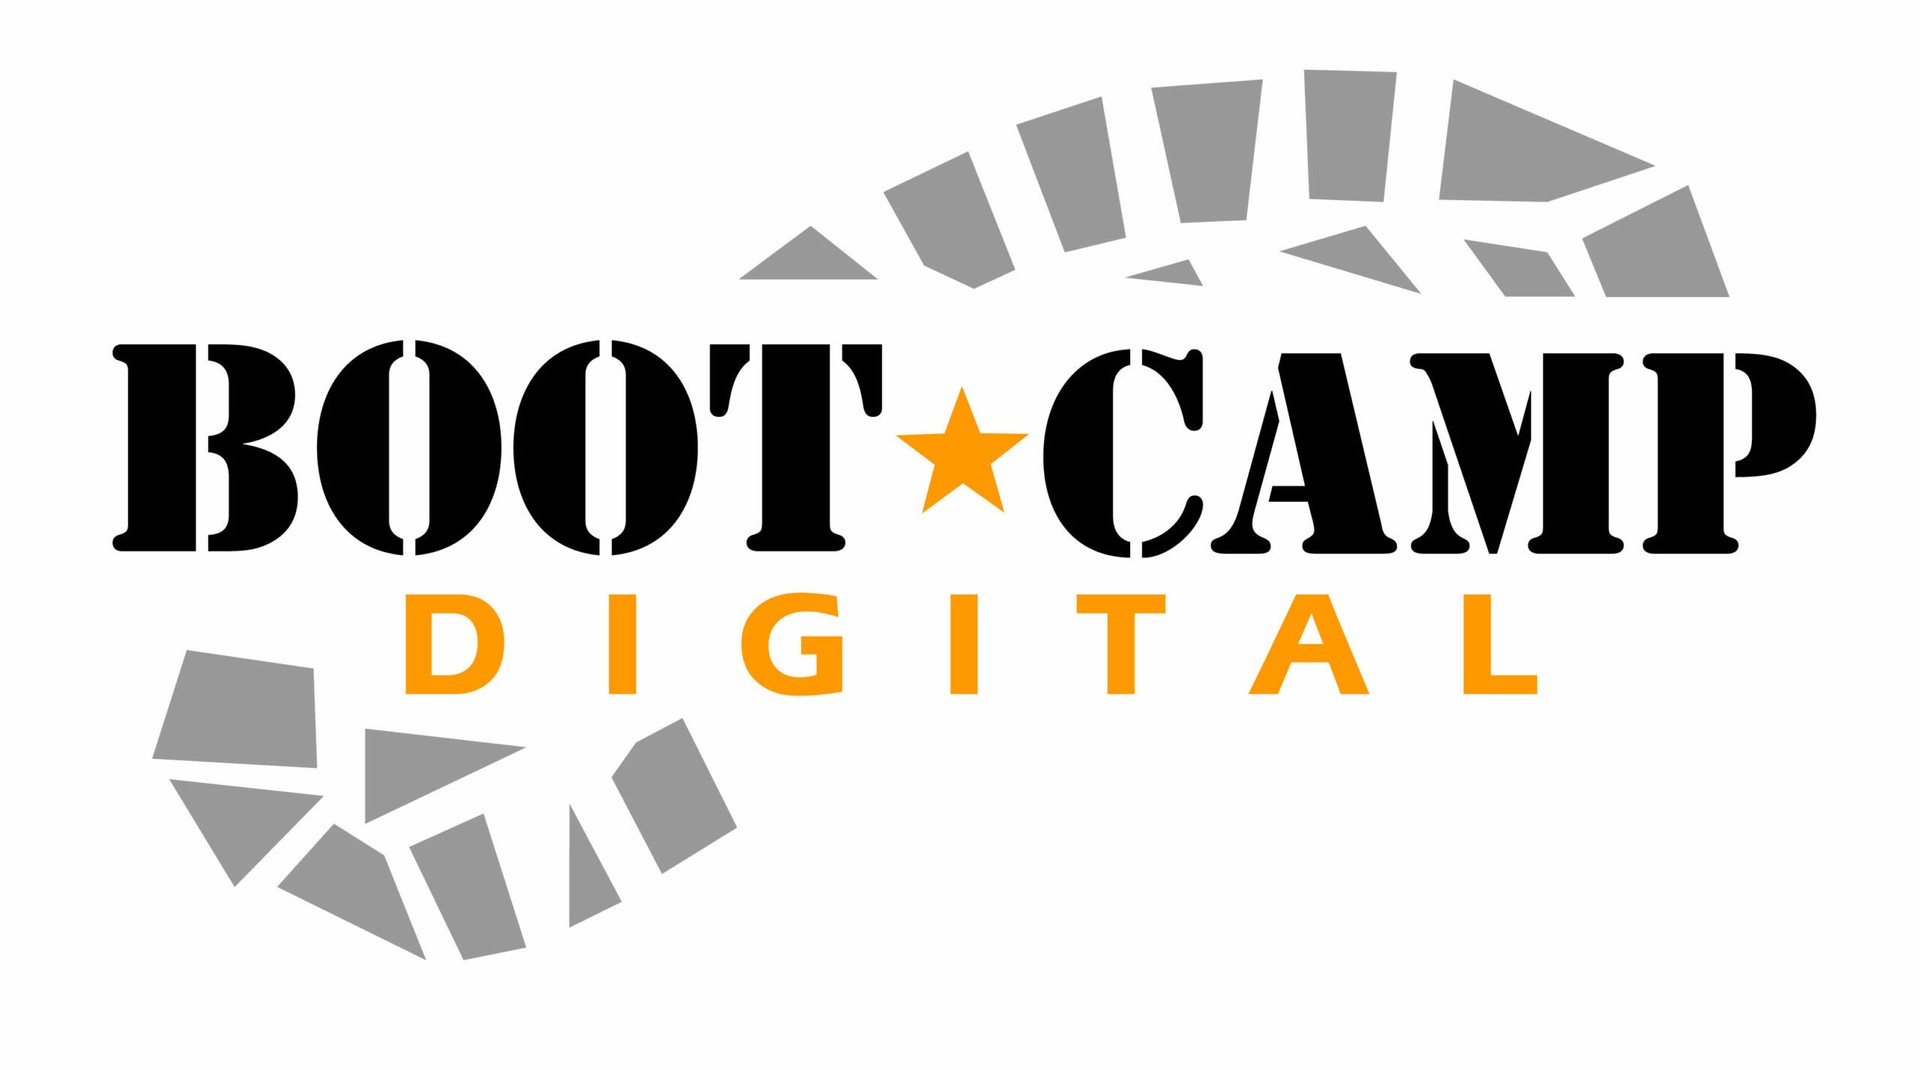 Digital marketing courses in Nepal - Bootcamp Digital